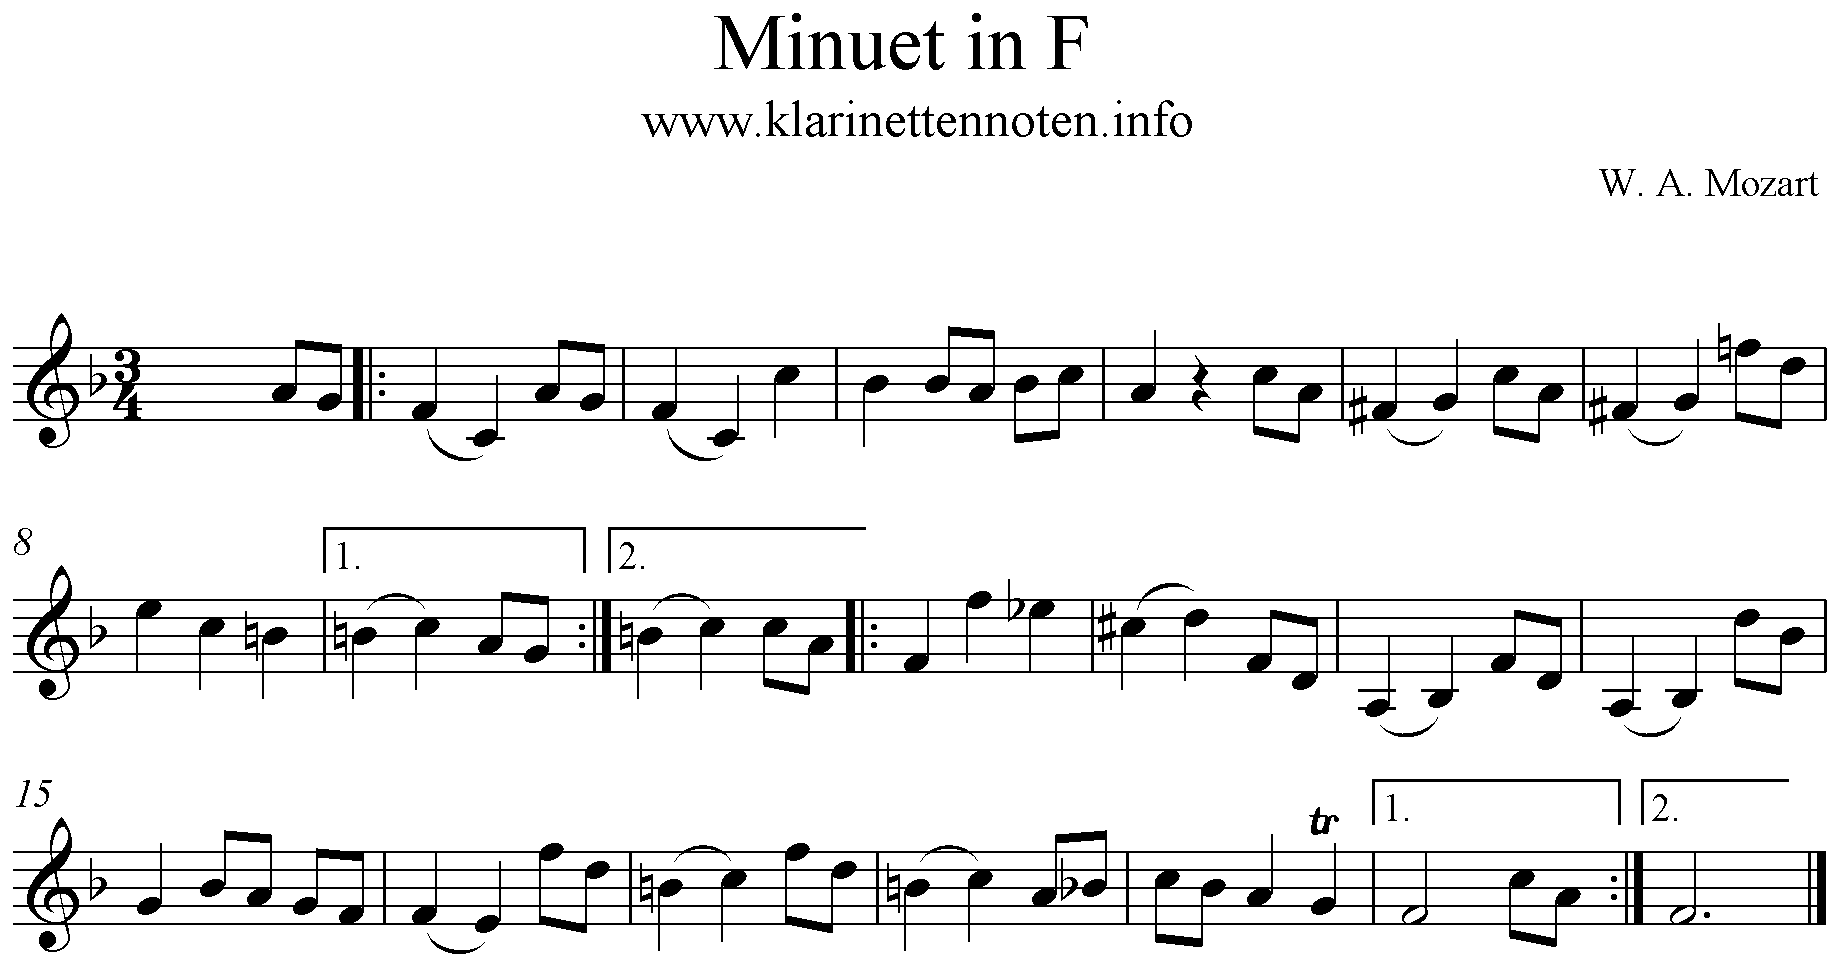 Menuet in F, W. A. Mozart